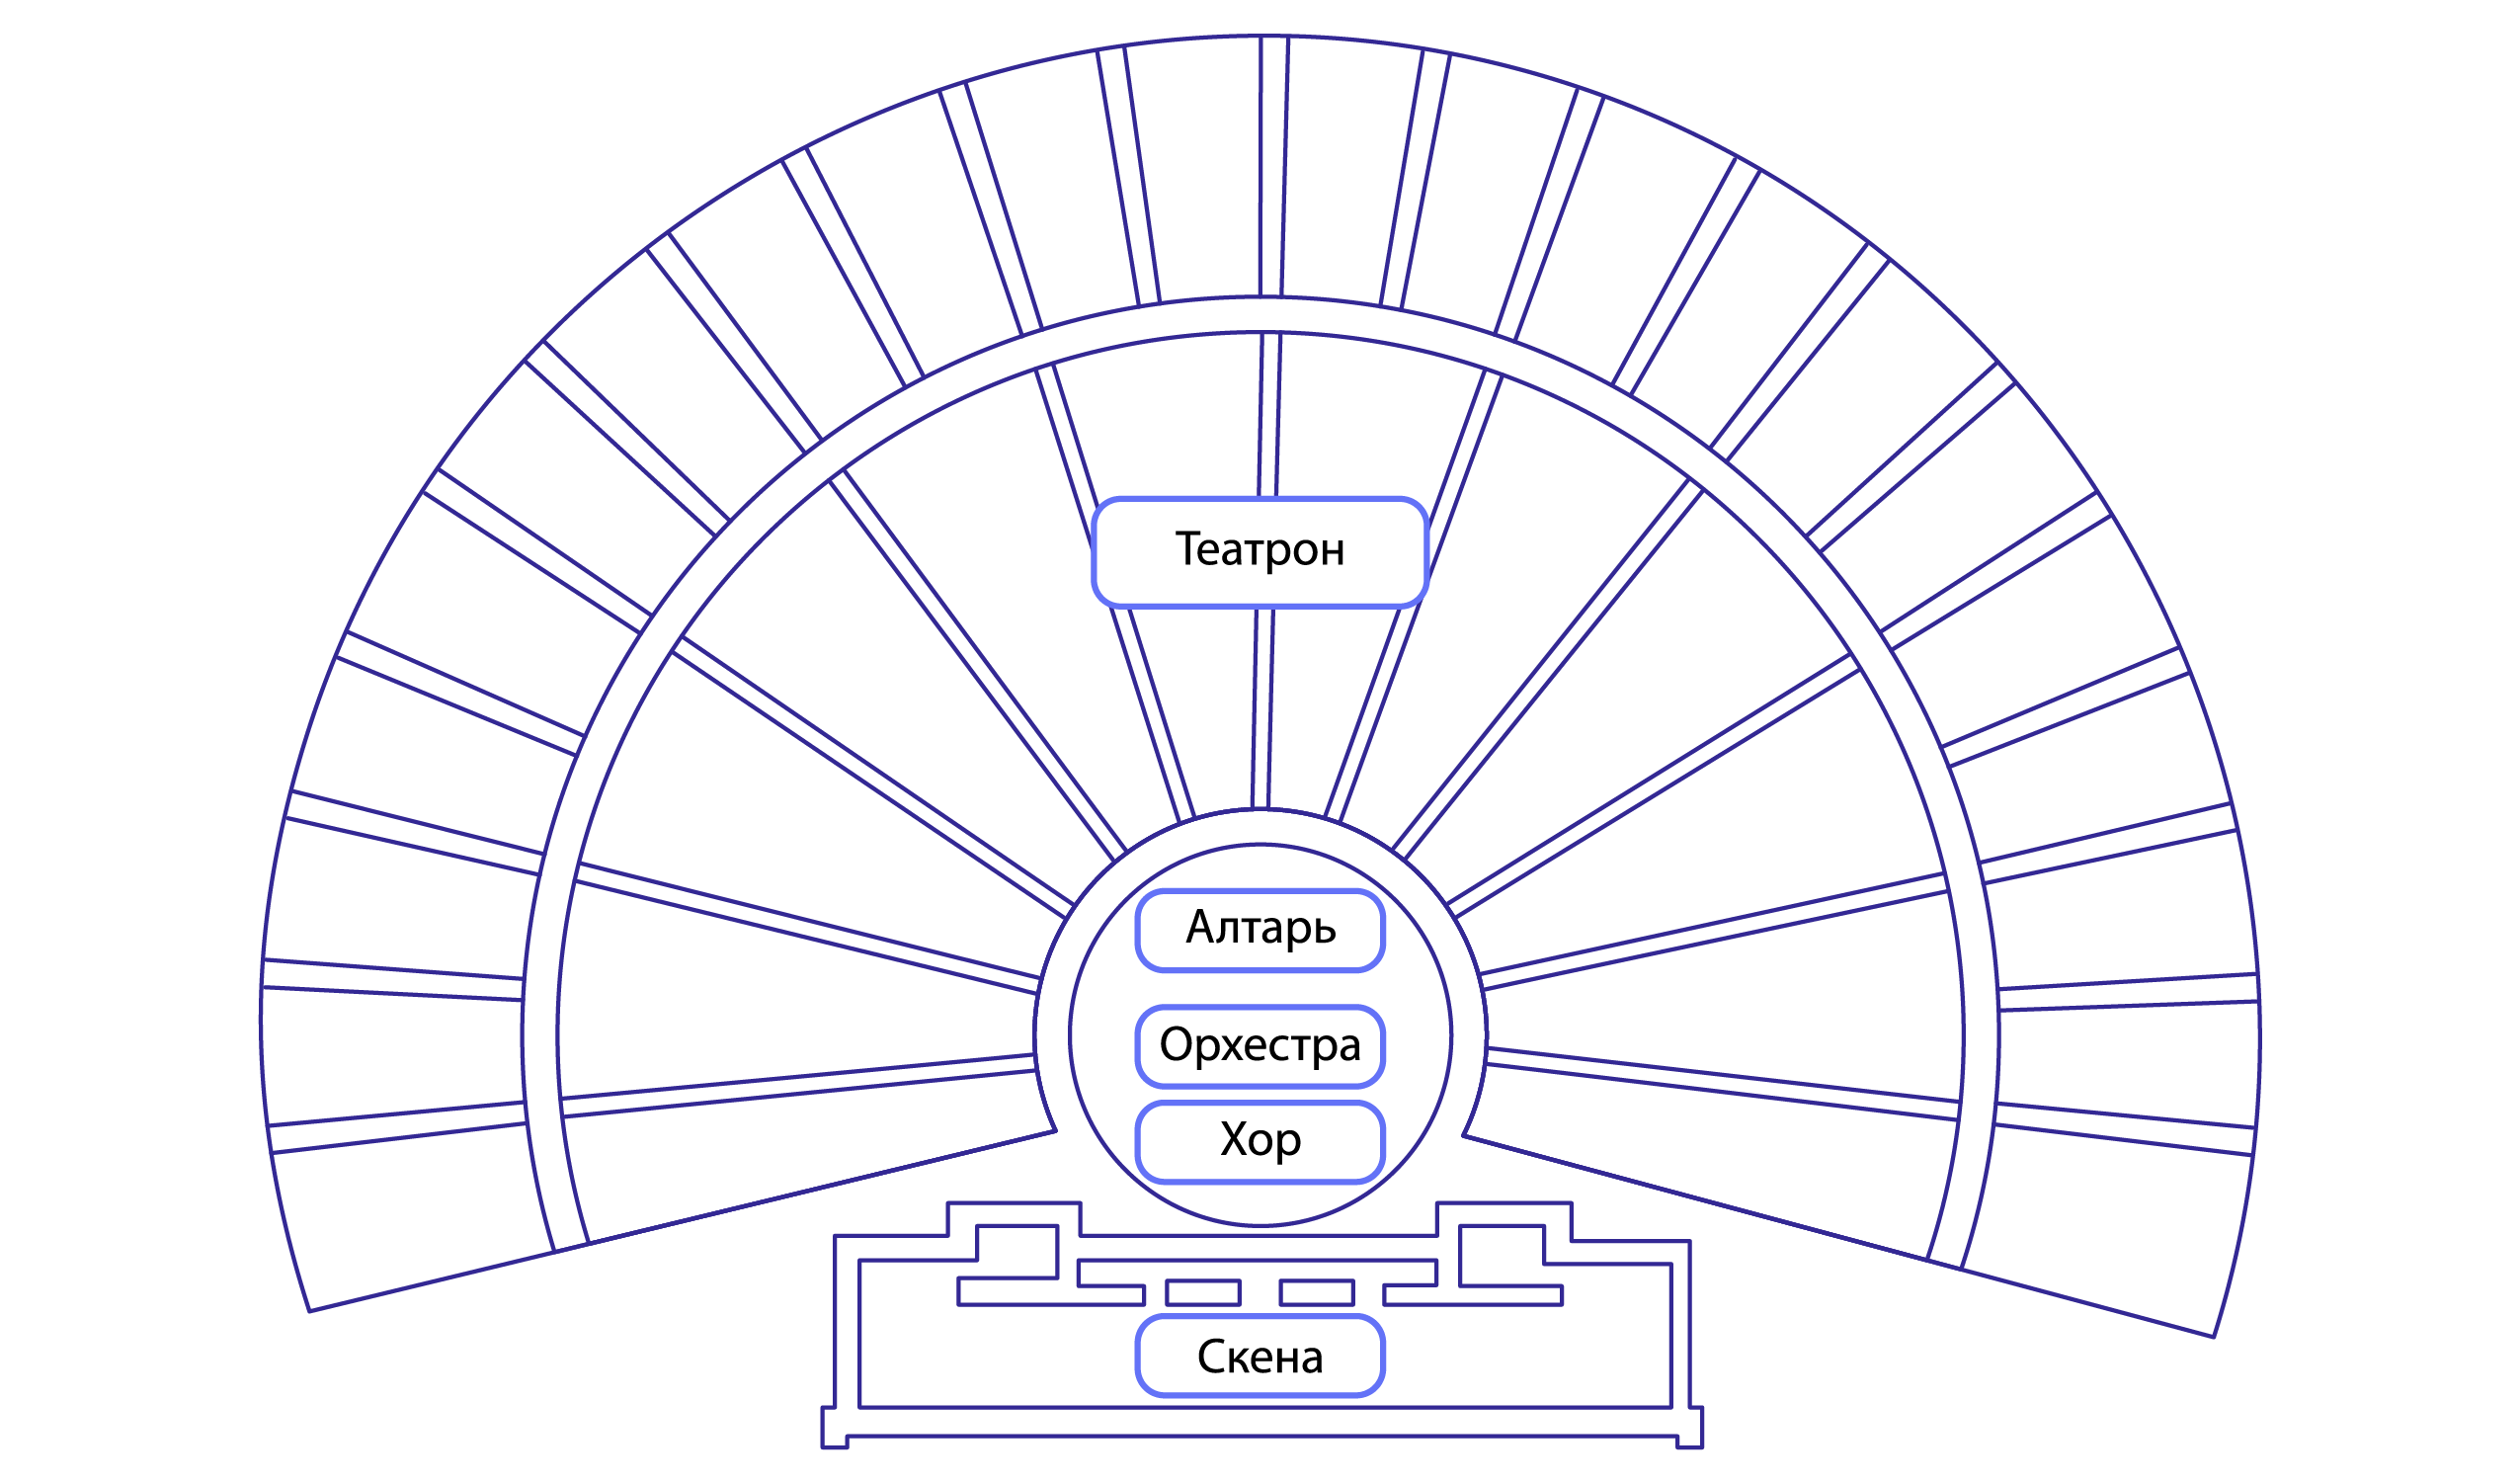 Рис. 8. Схема-план древнегреческого театра